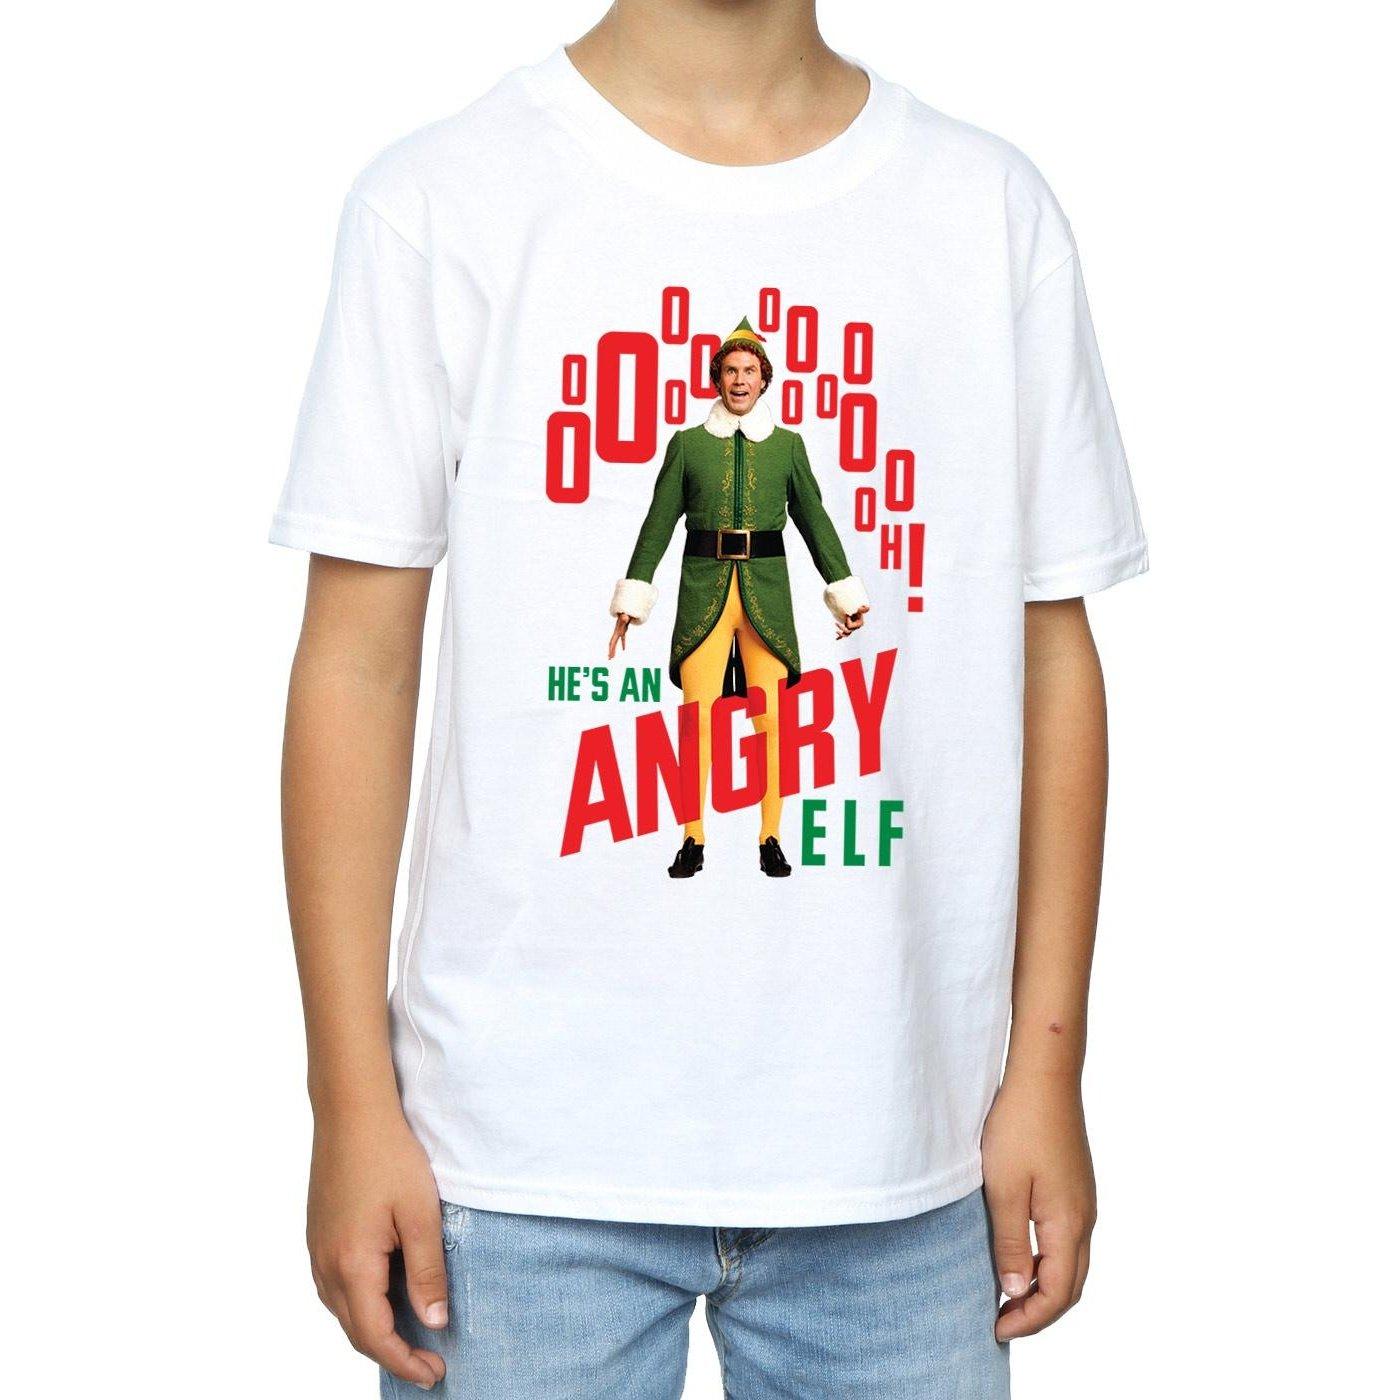 Elf  Angry TShirt 